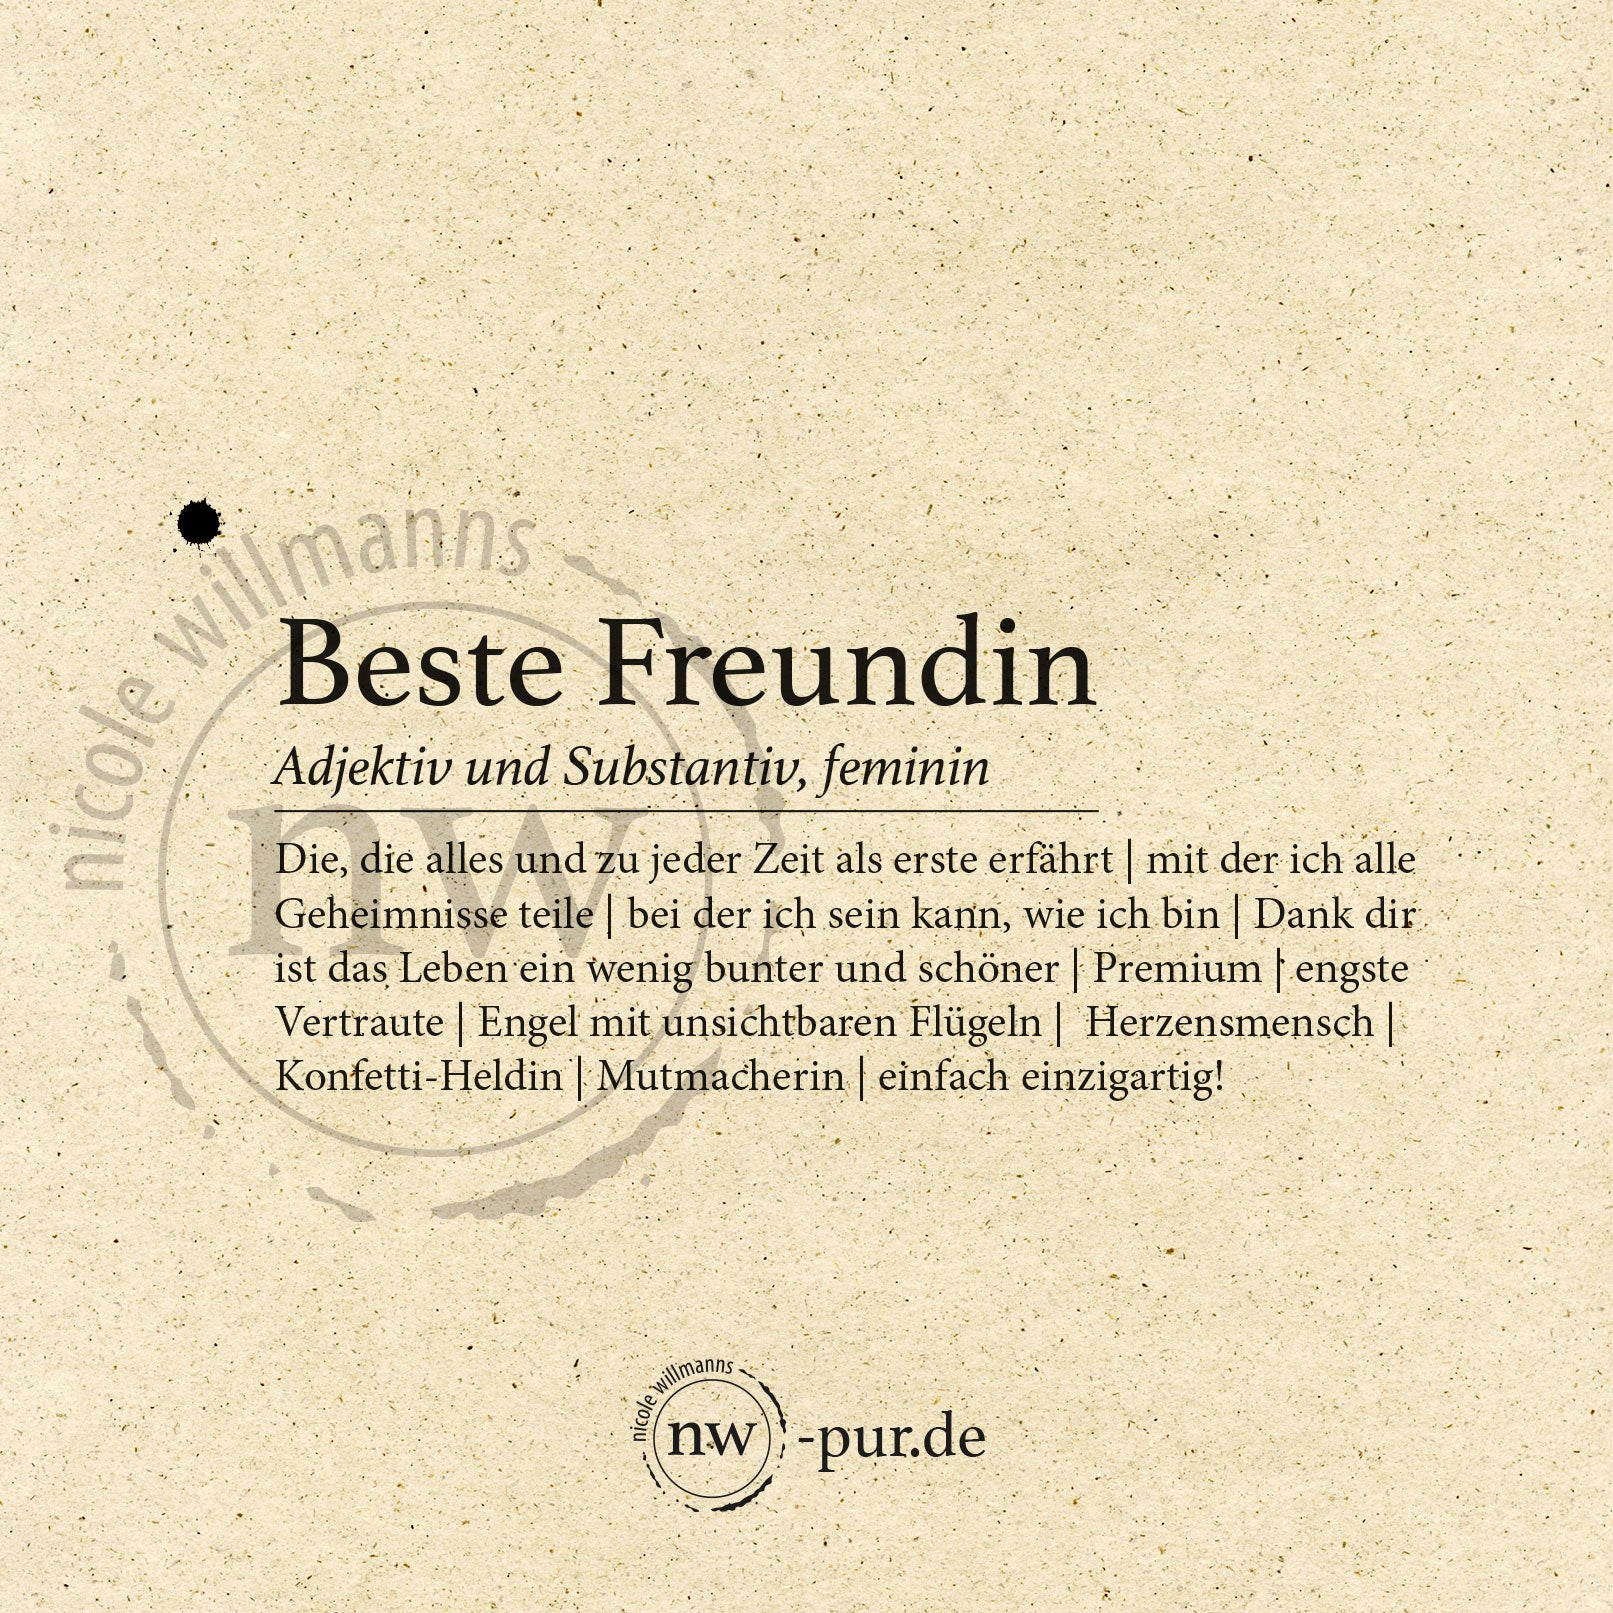 Postkarte "Beste Freundin"